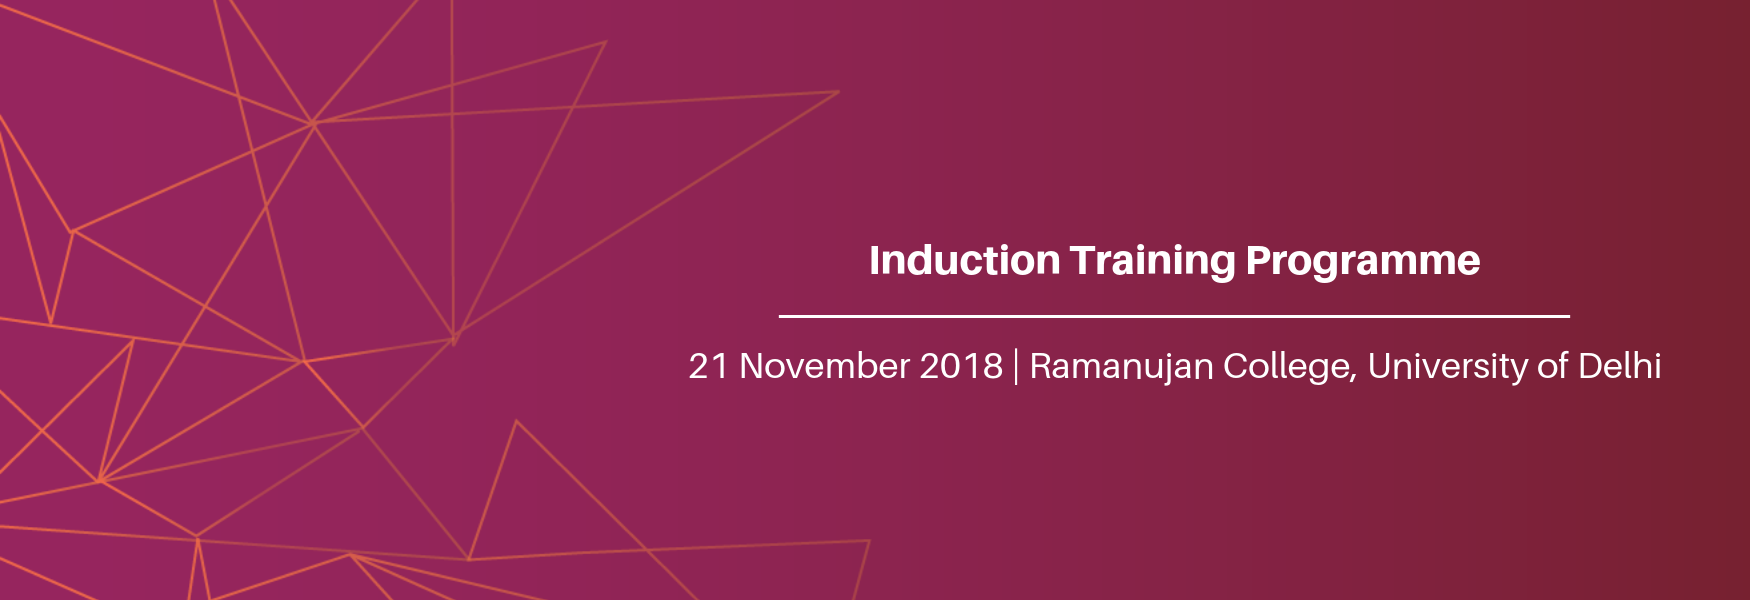 Induction Training Programme